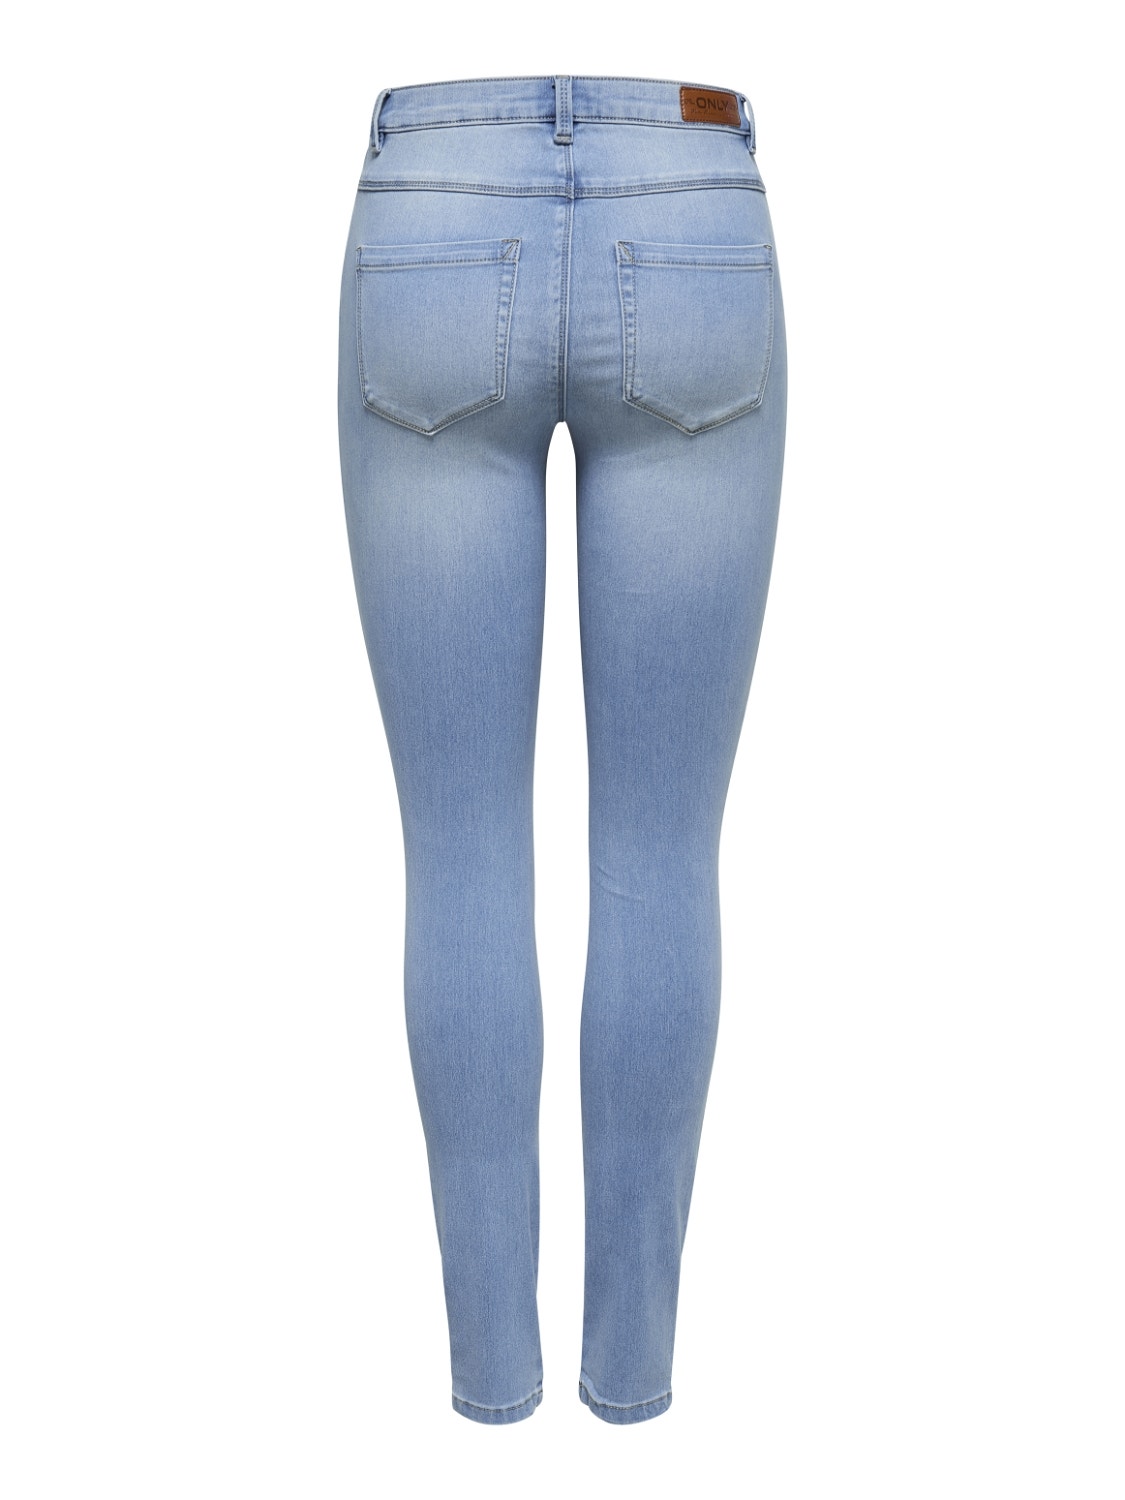 ONLY Skinny Fit High rise Jeans -Light Blue Denim - 15169037